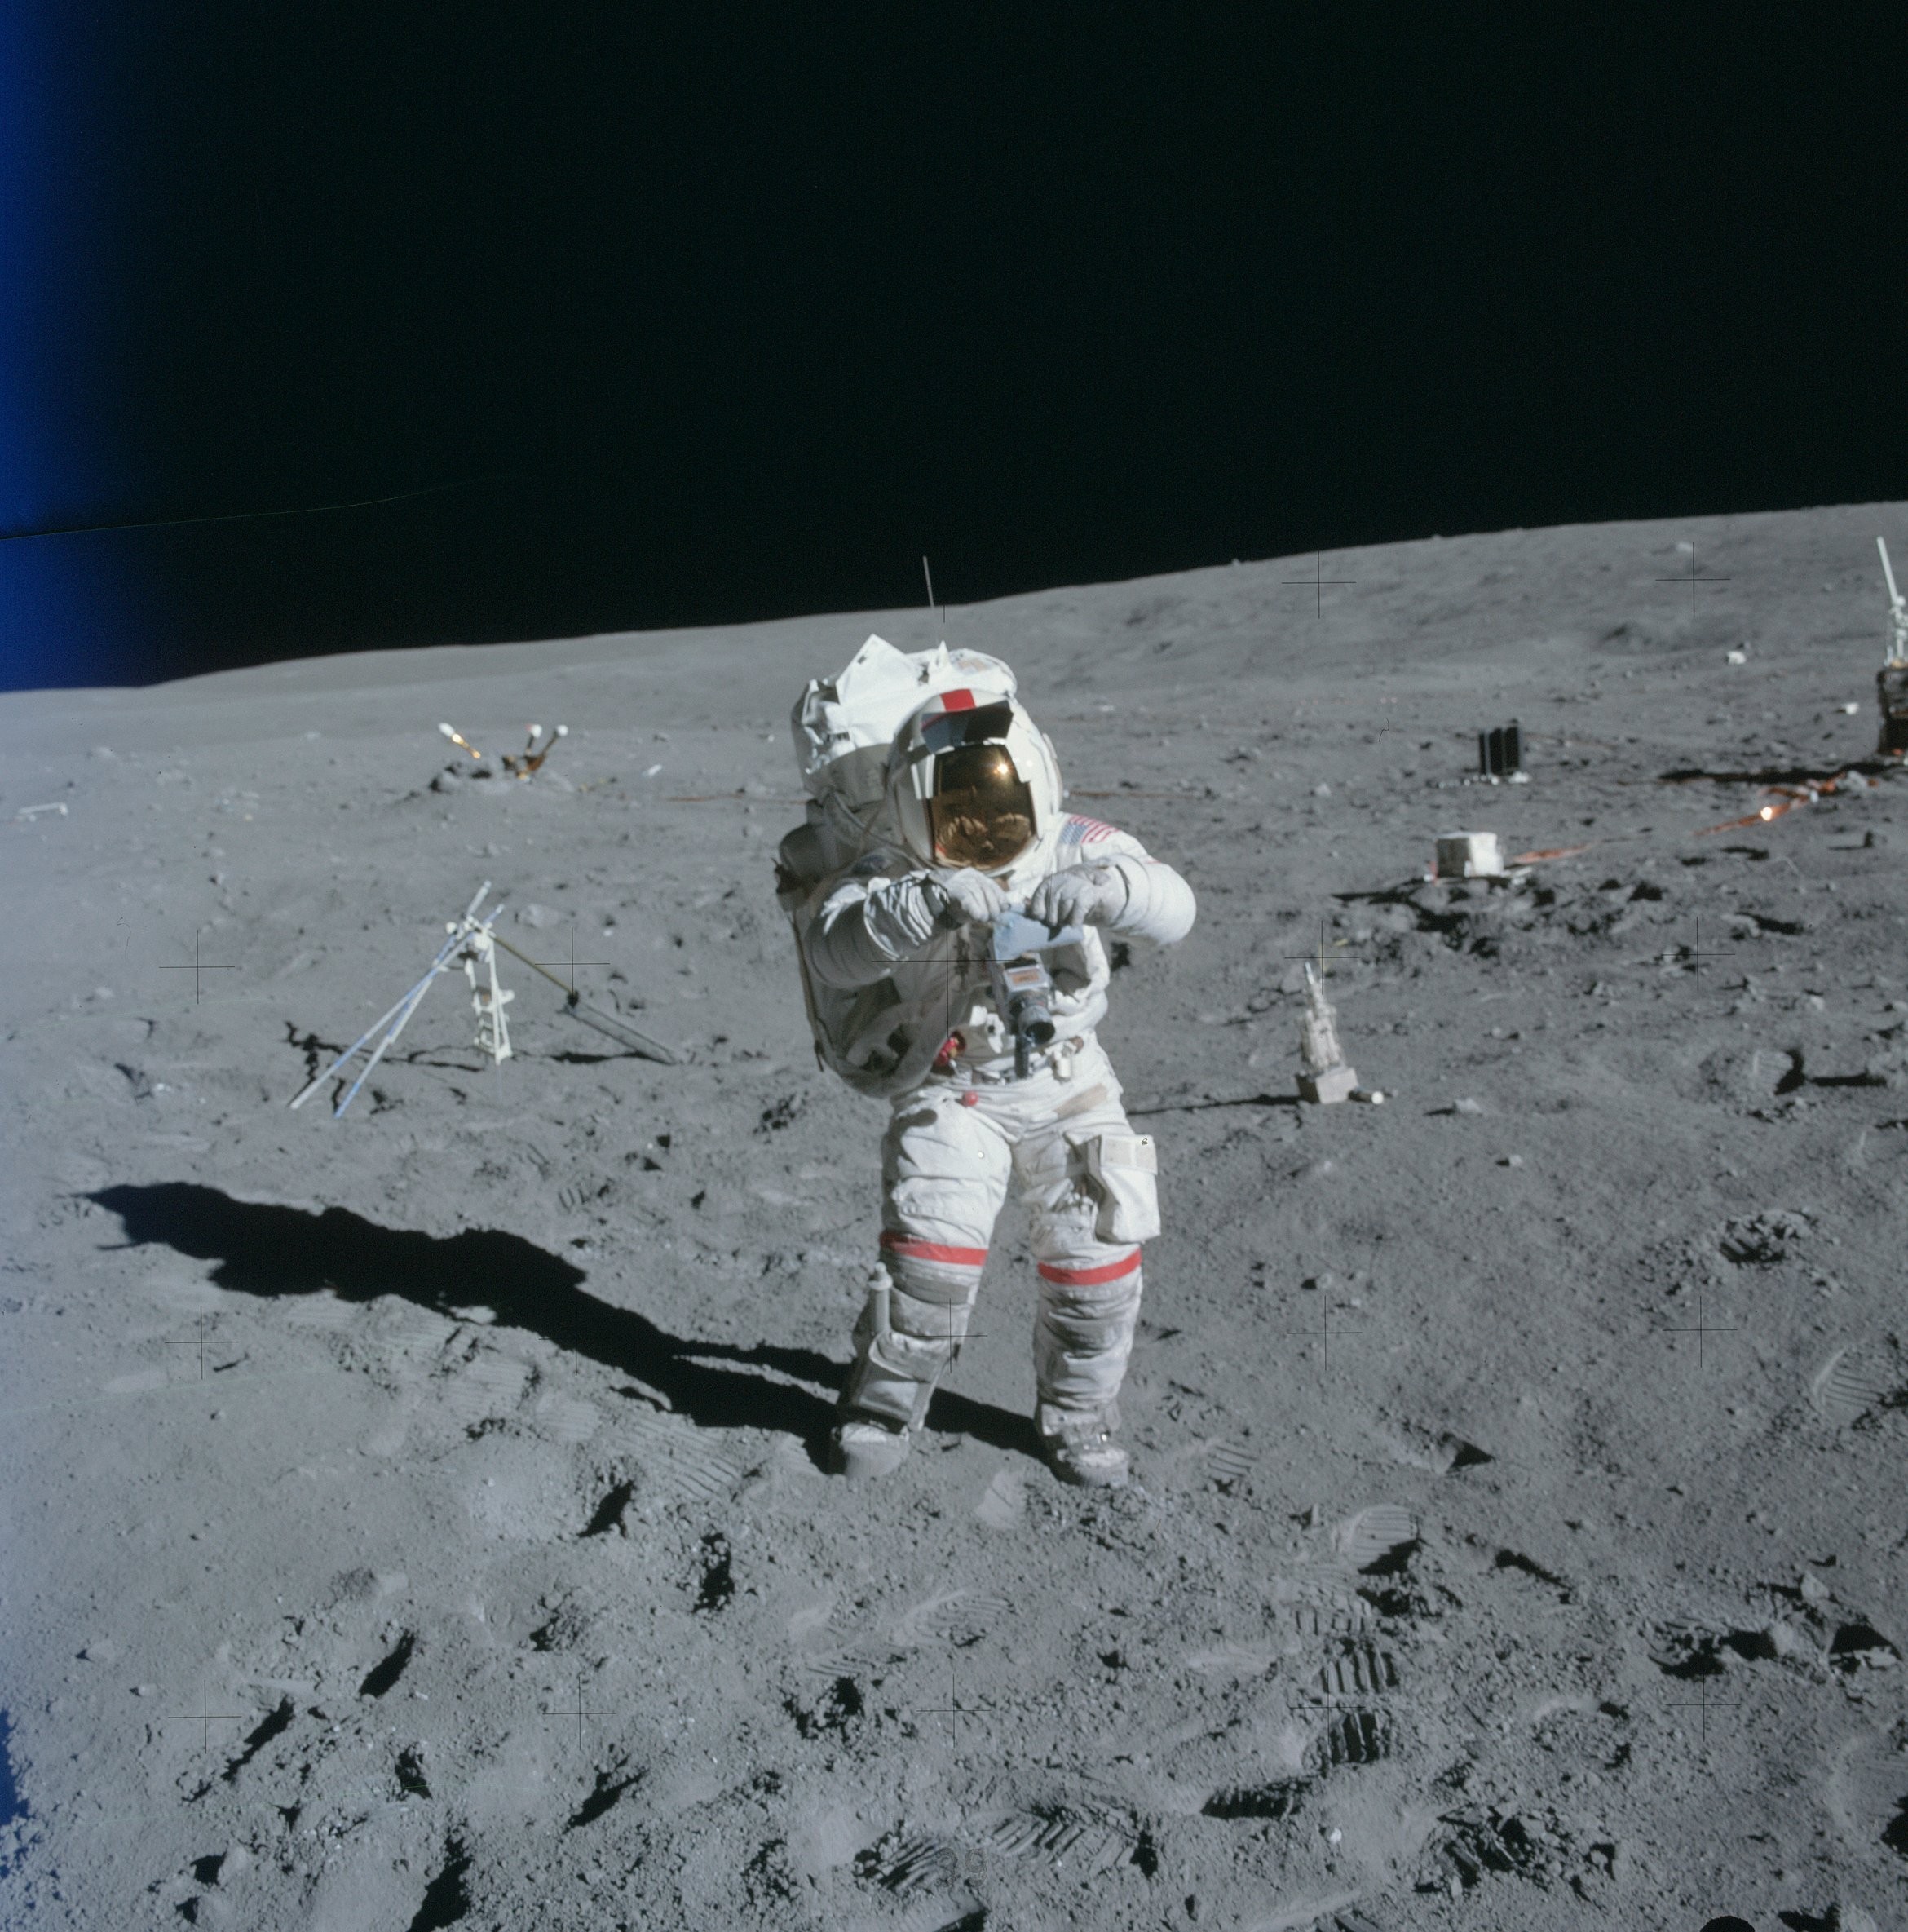 General 2340x2369 space Moon astronaut Apollo program NASA